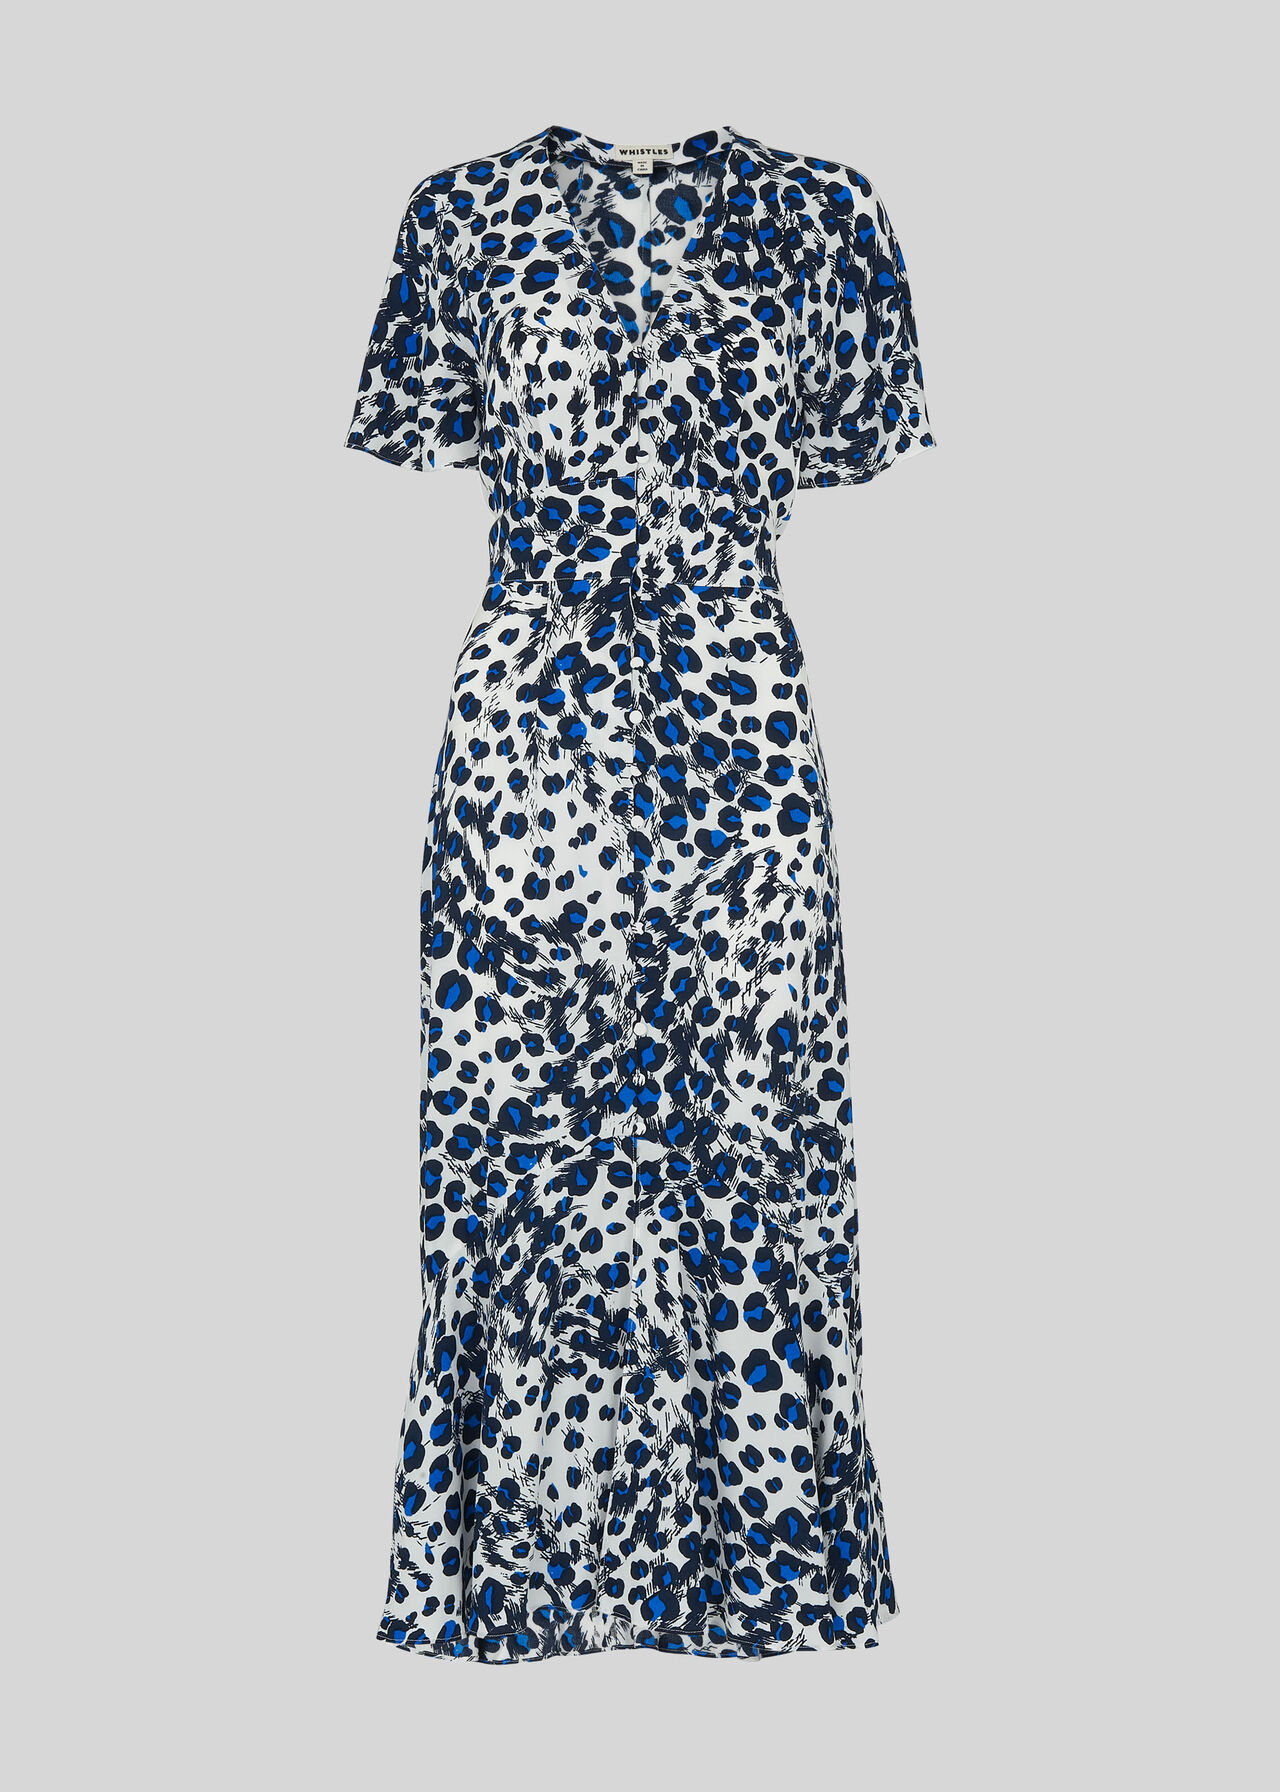 Brushed Leopard Button Dress Blue/Multi